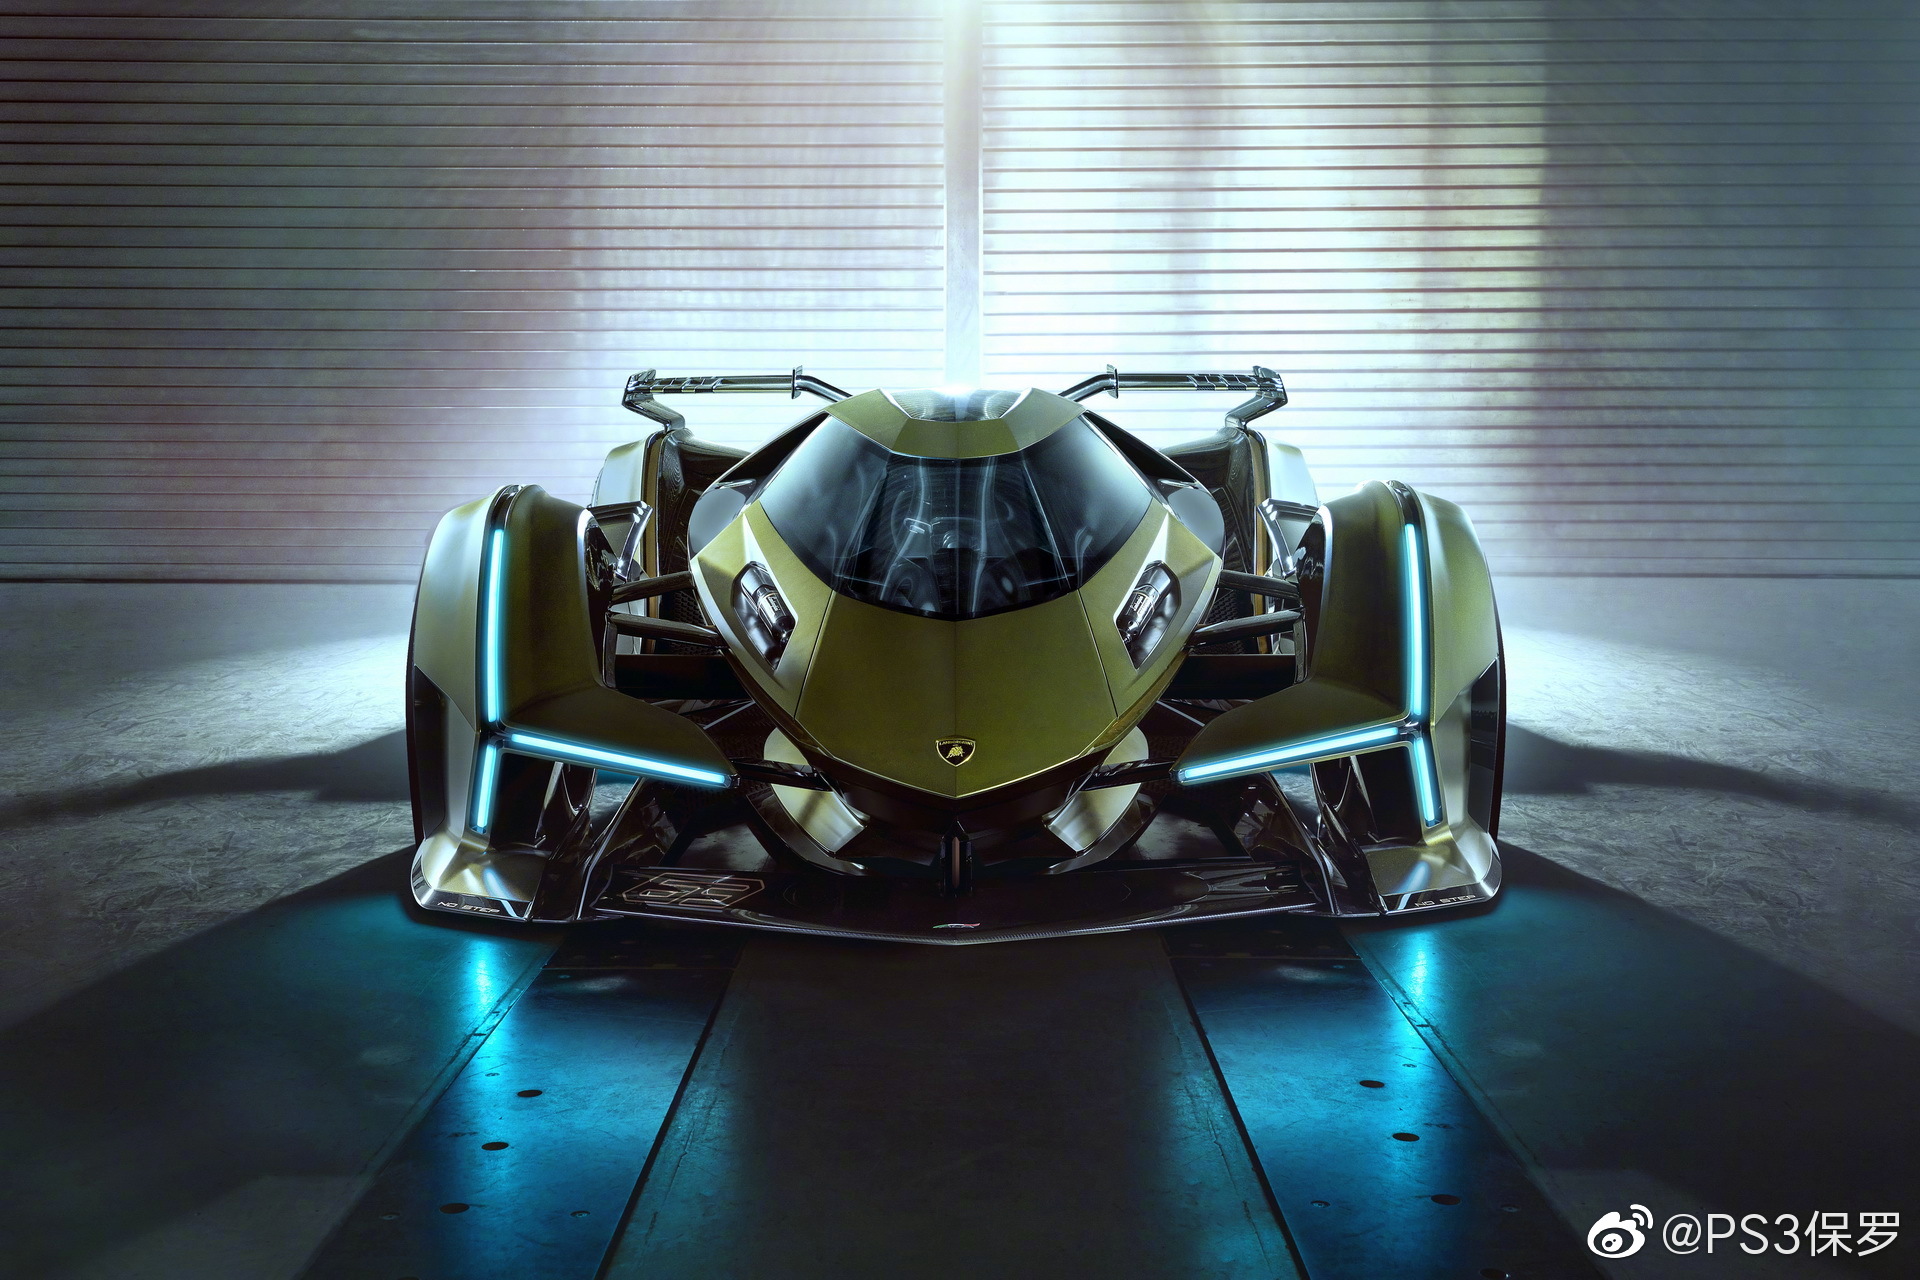 兰博V12 GT Vision Gran Turismo到达兰博基尼博物馆